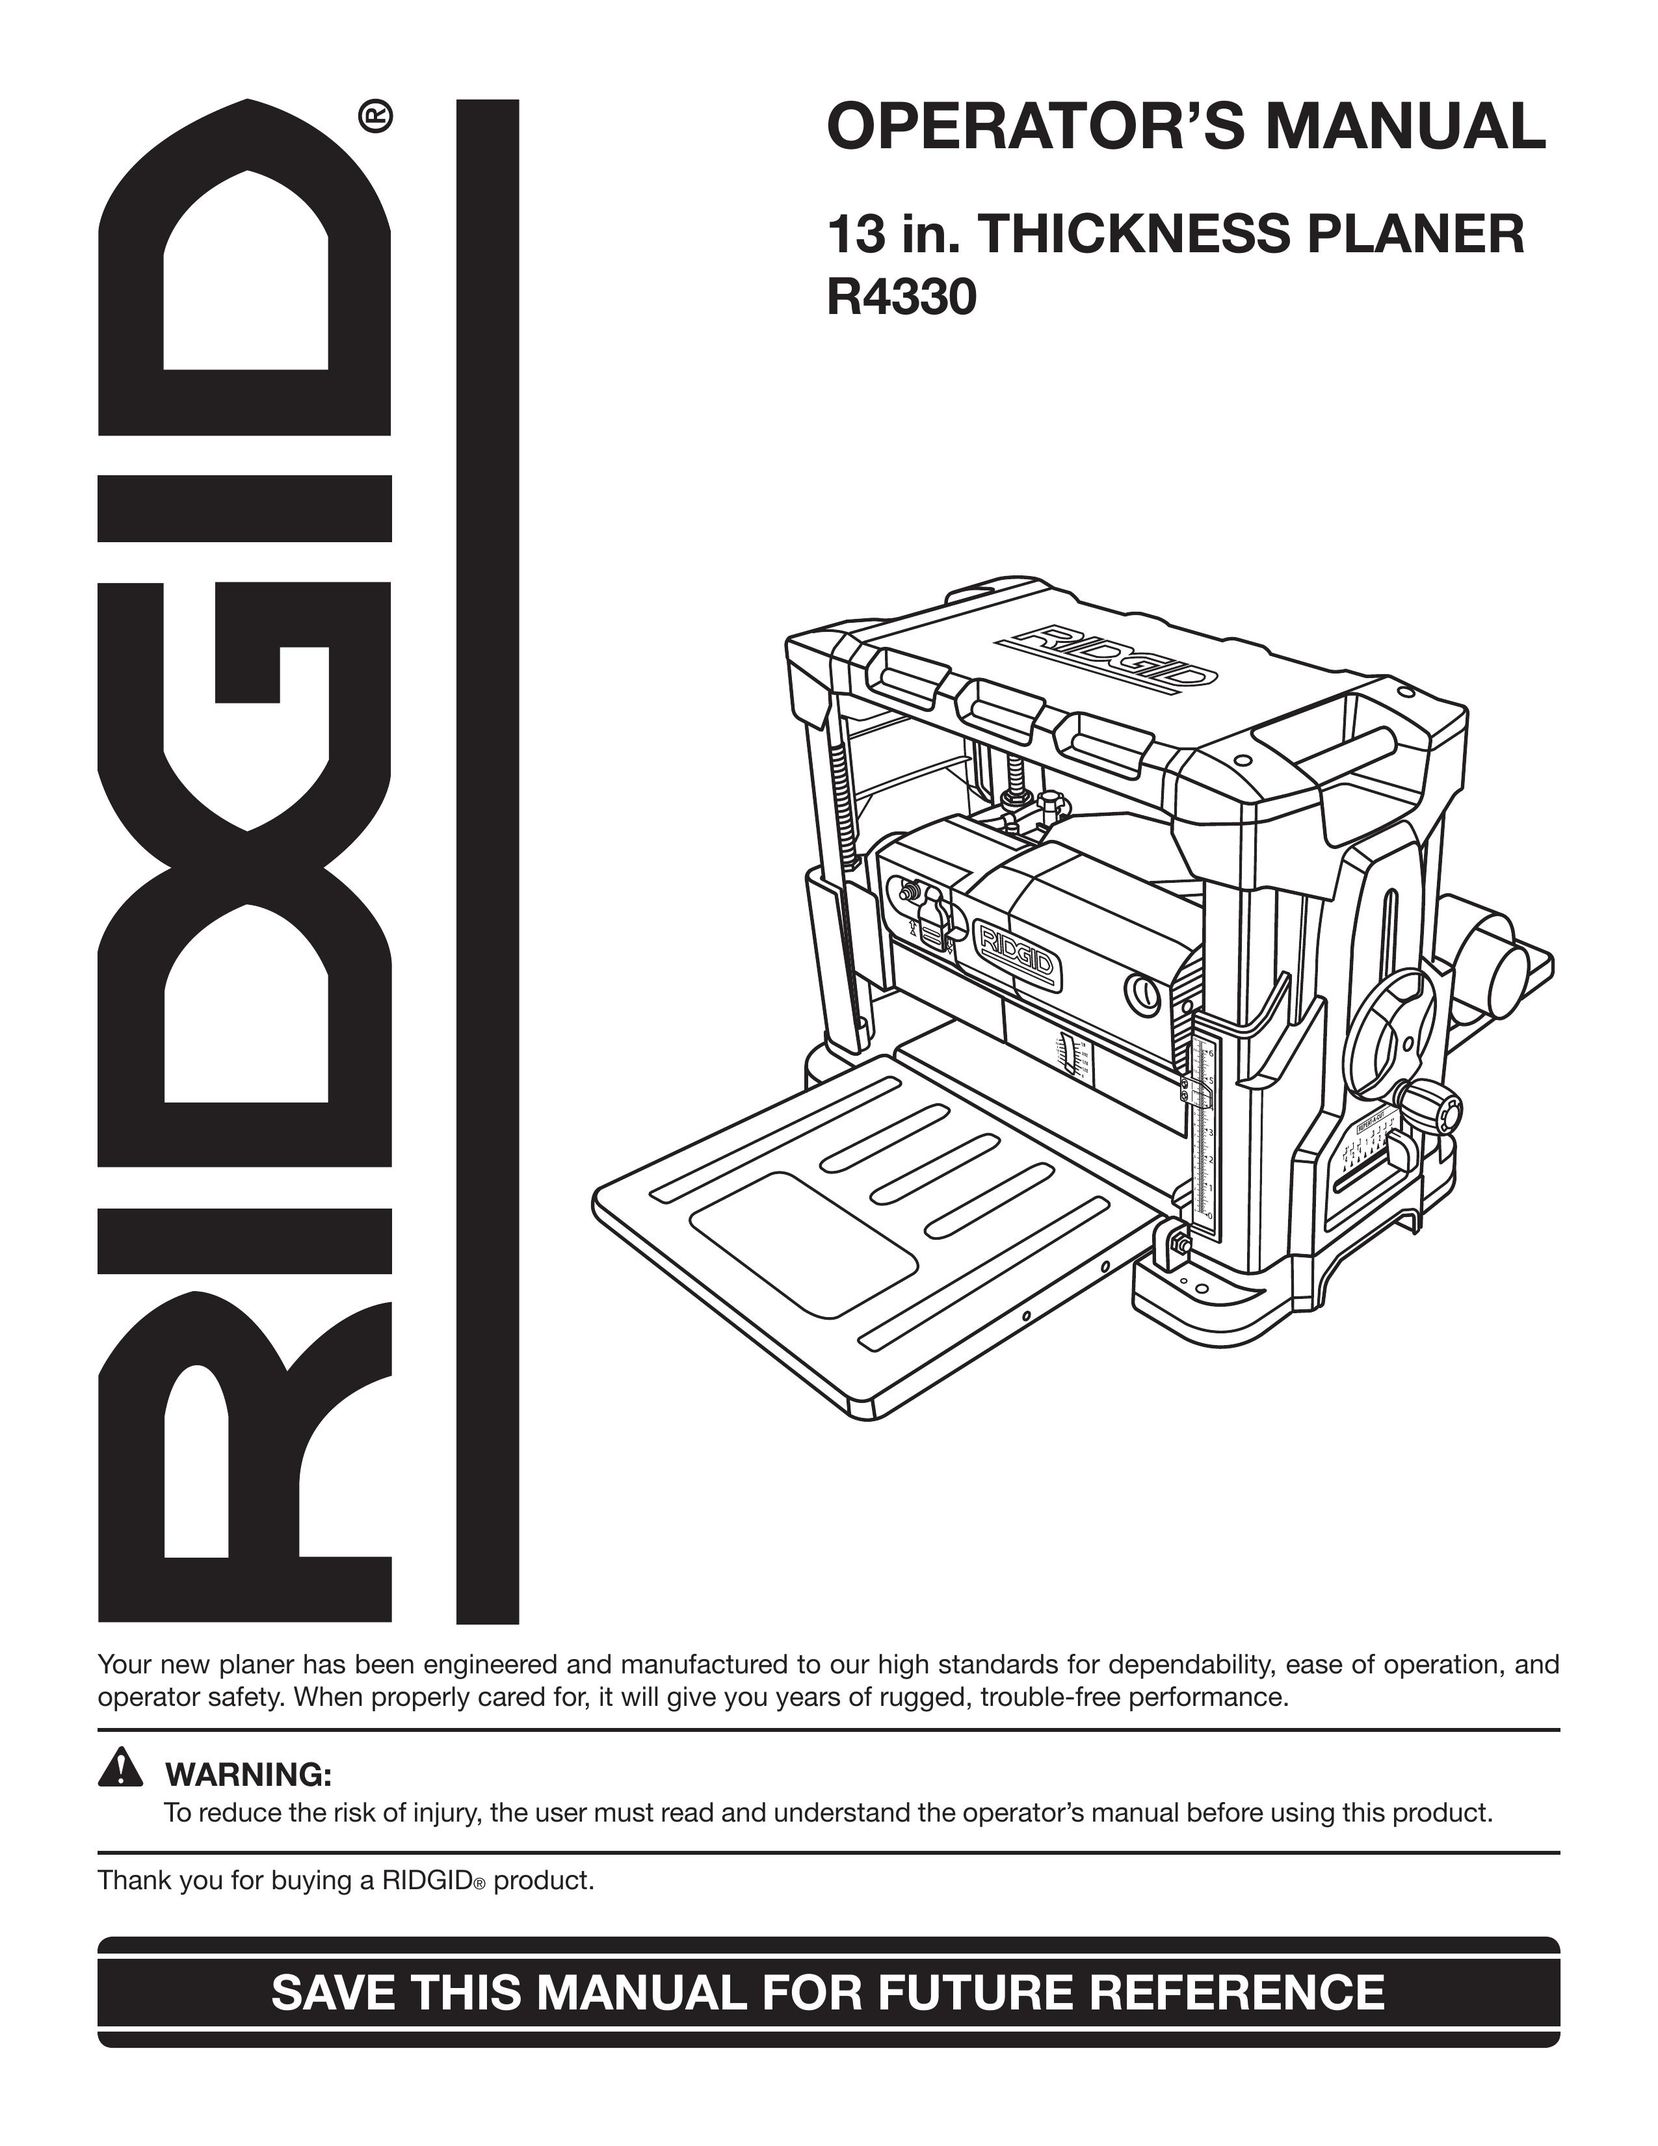 RIDGID R4330 Planer User Manual